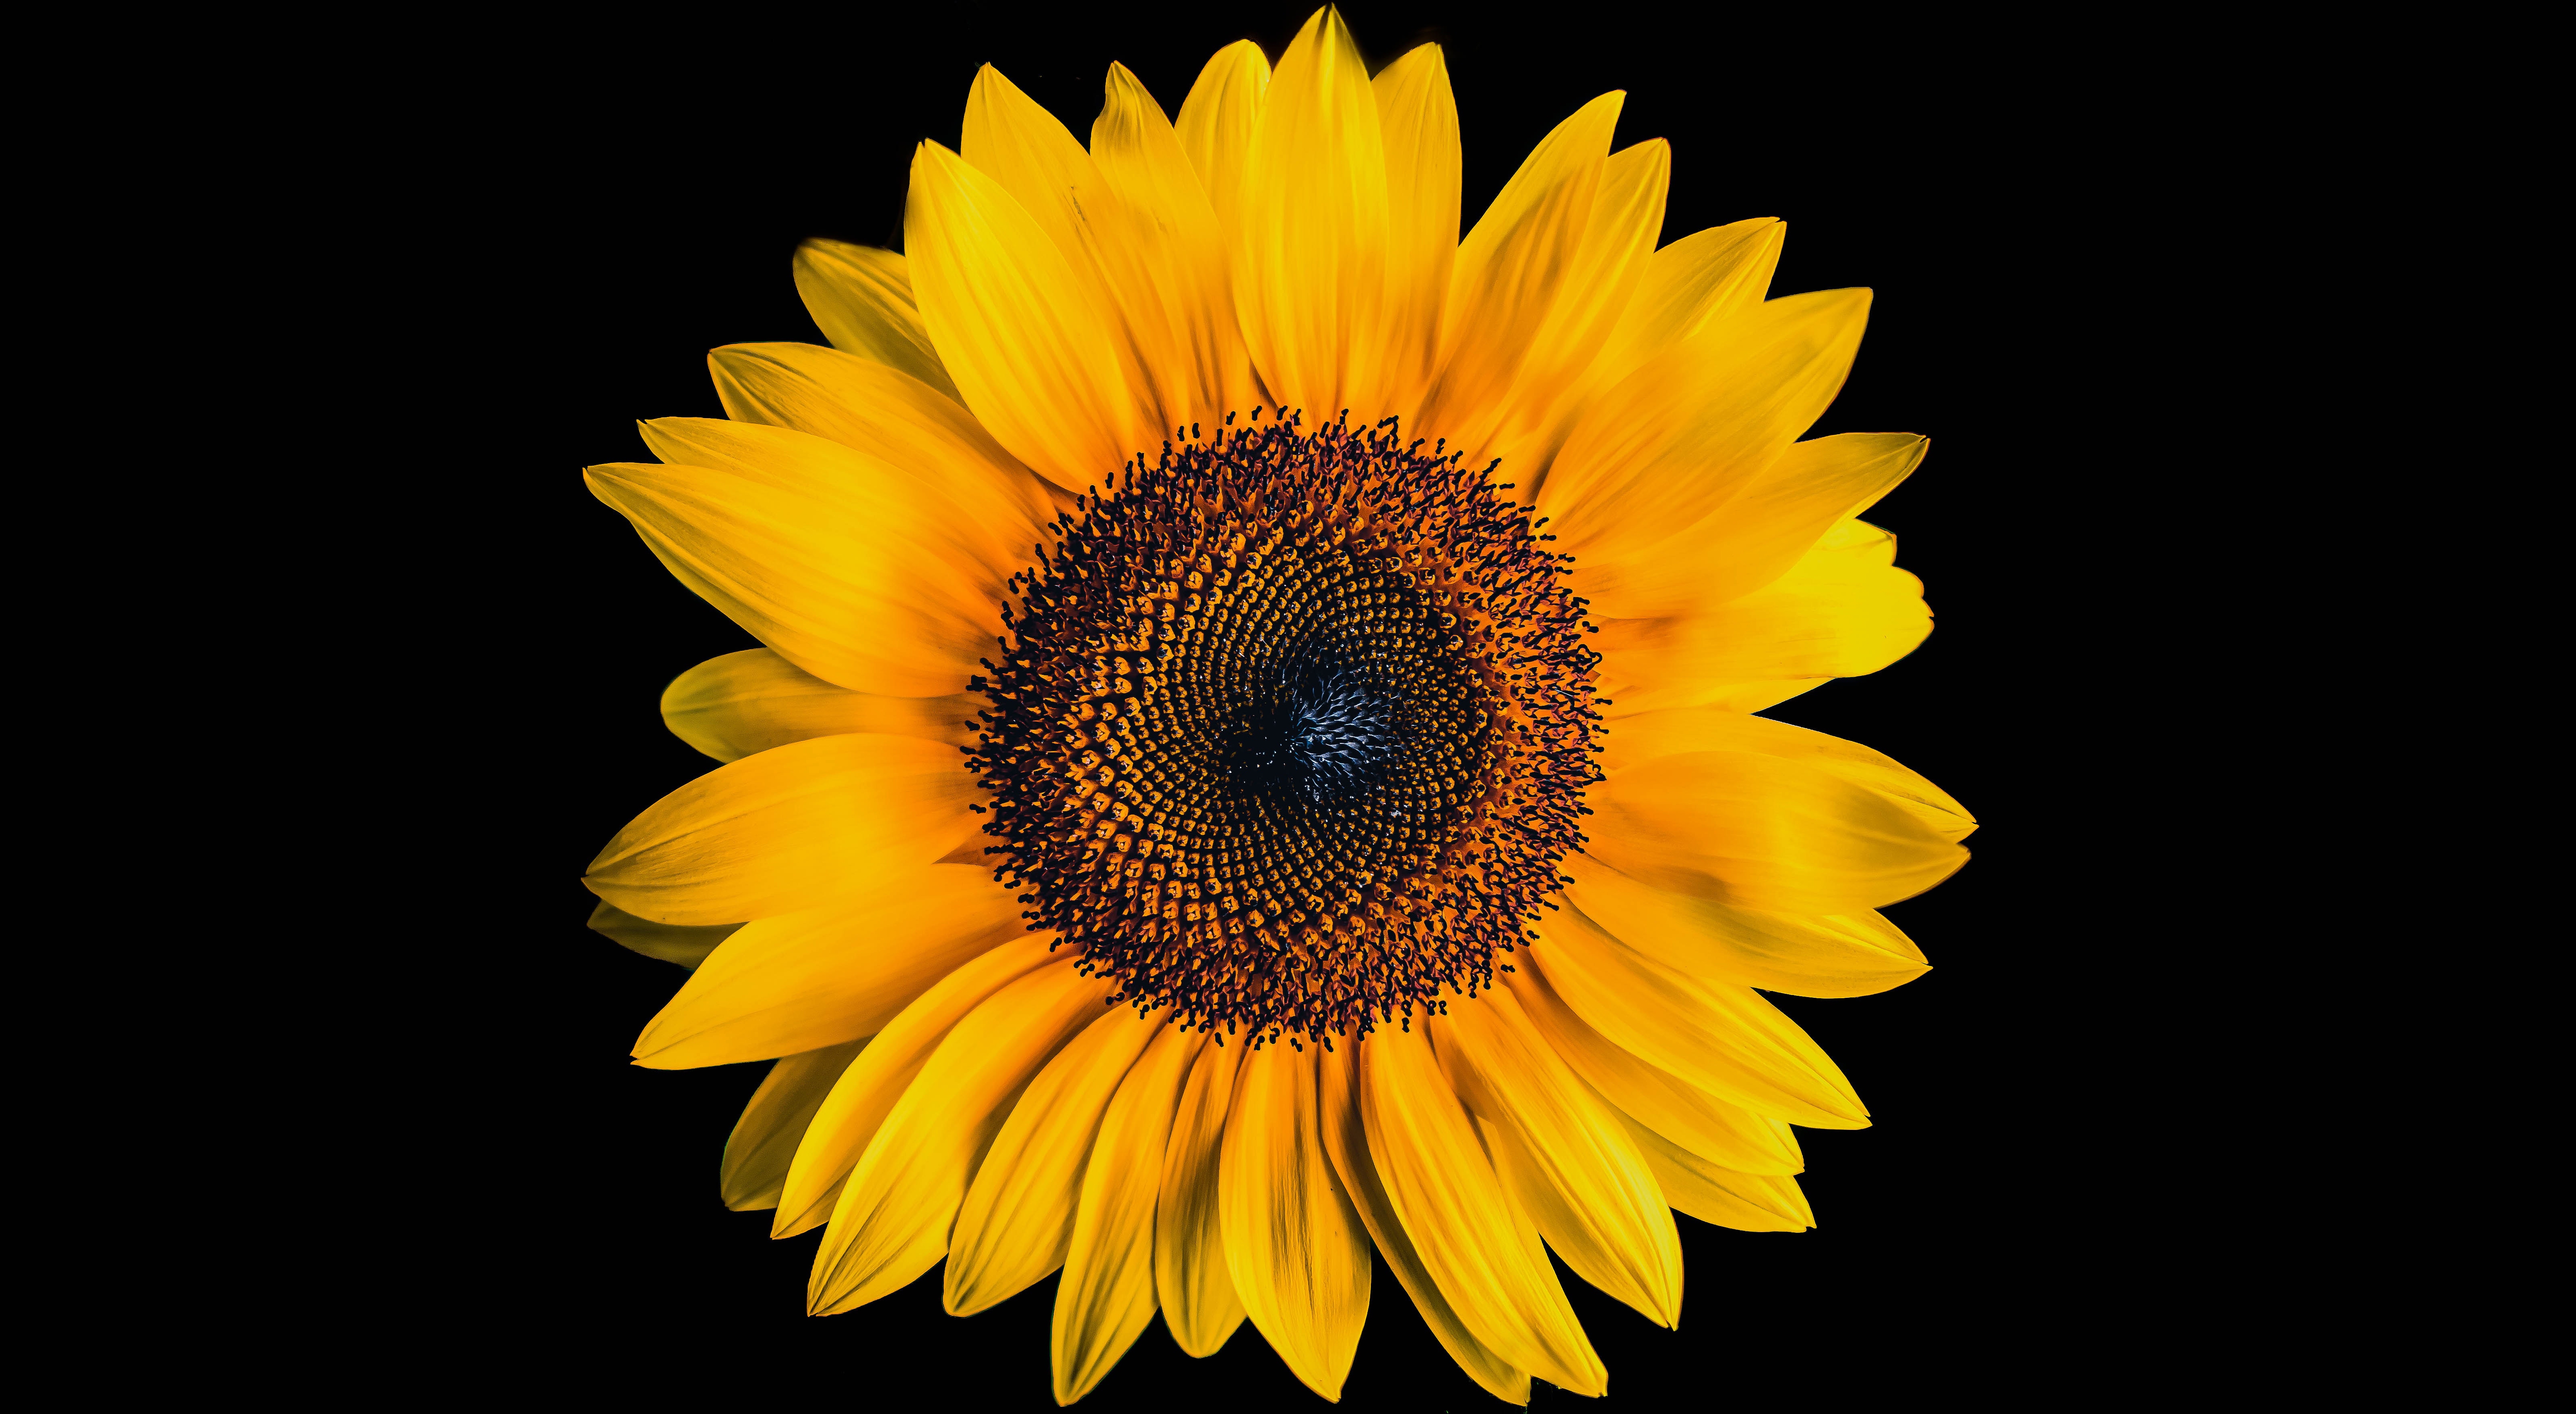 HD wallpaper, Amoled, Yellow Flower, Sunflower, Black Background, 5K